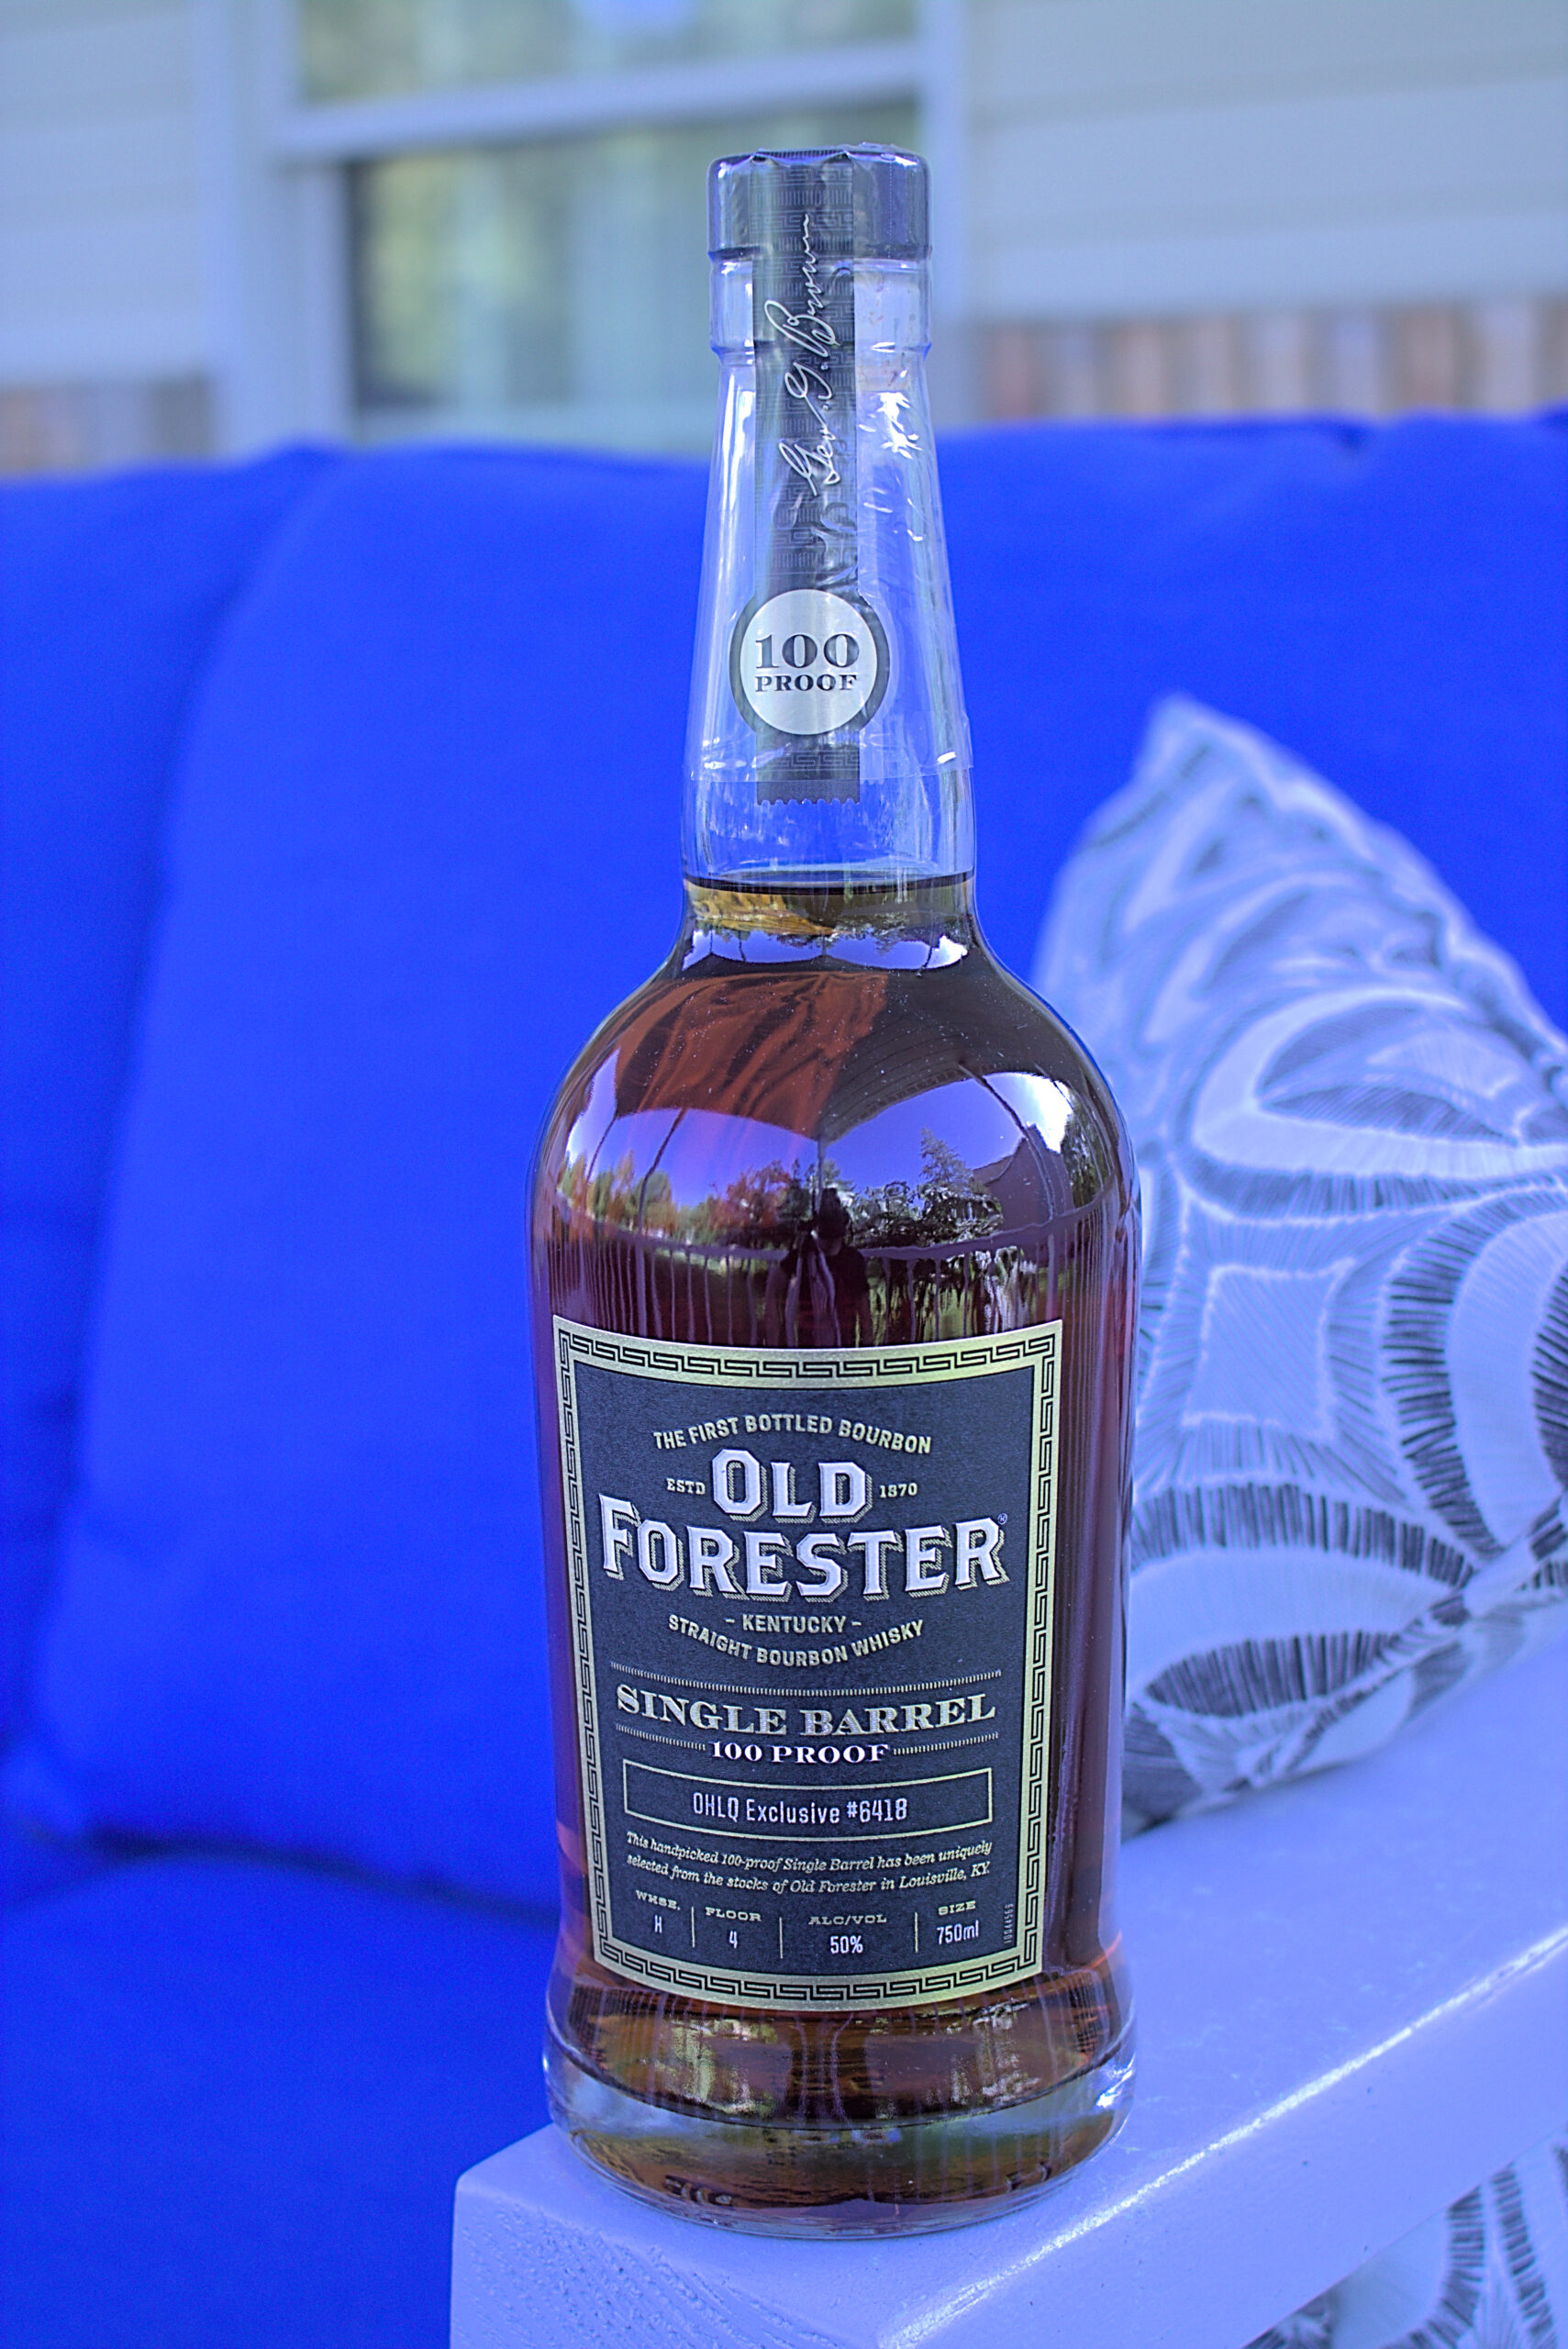 Old Forester Single Barrel - OHLQ Exclusive #6418 Bottle